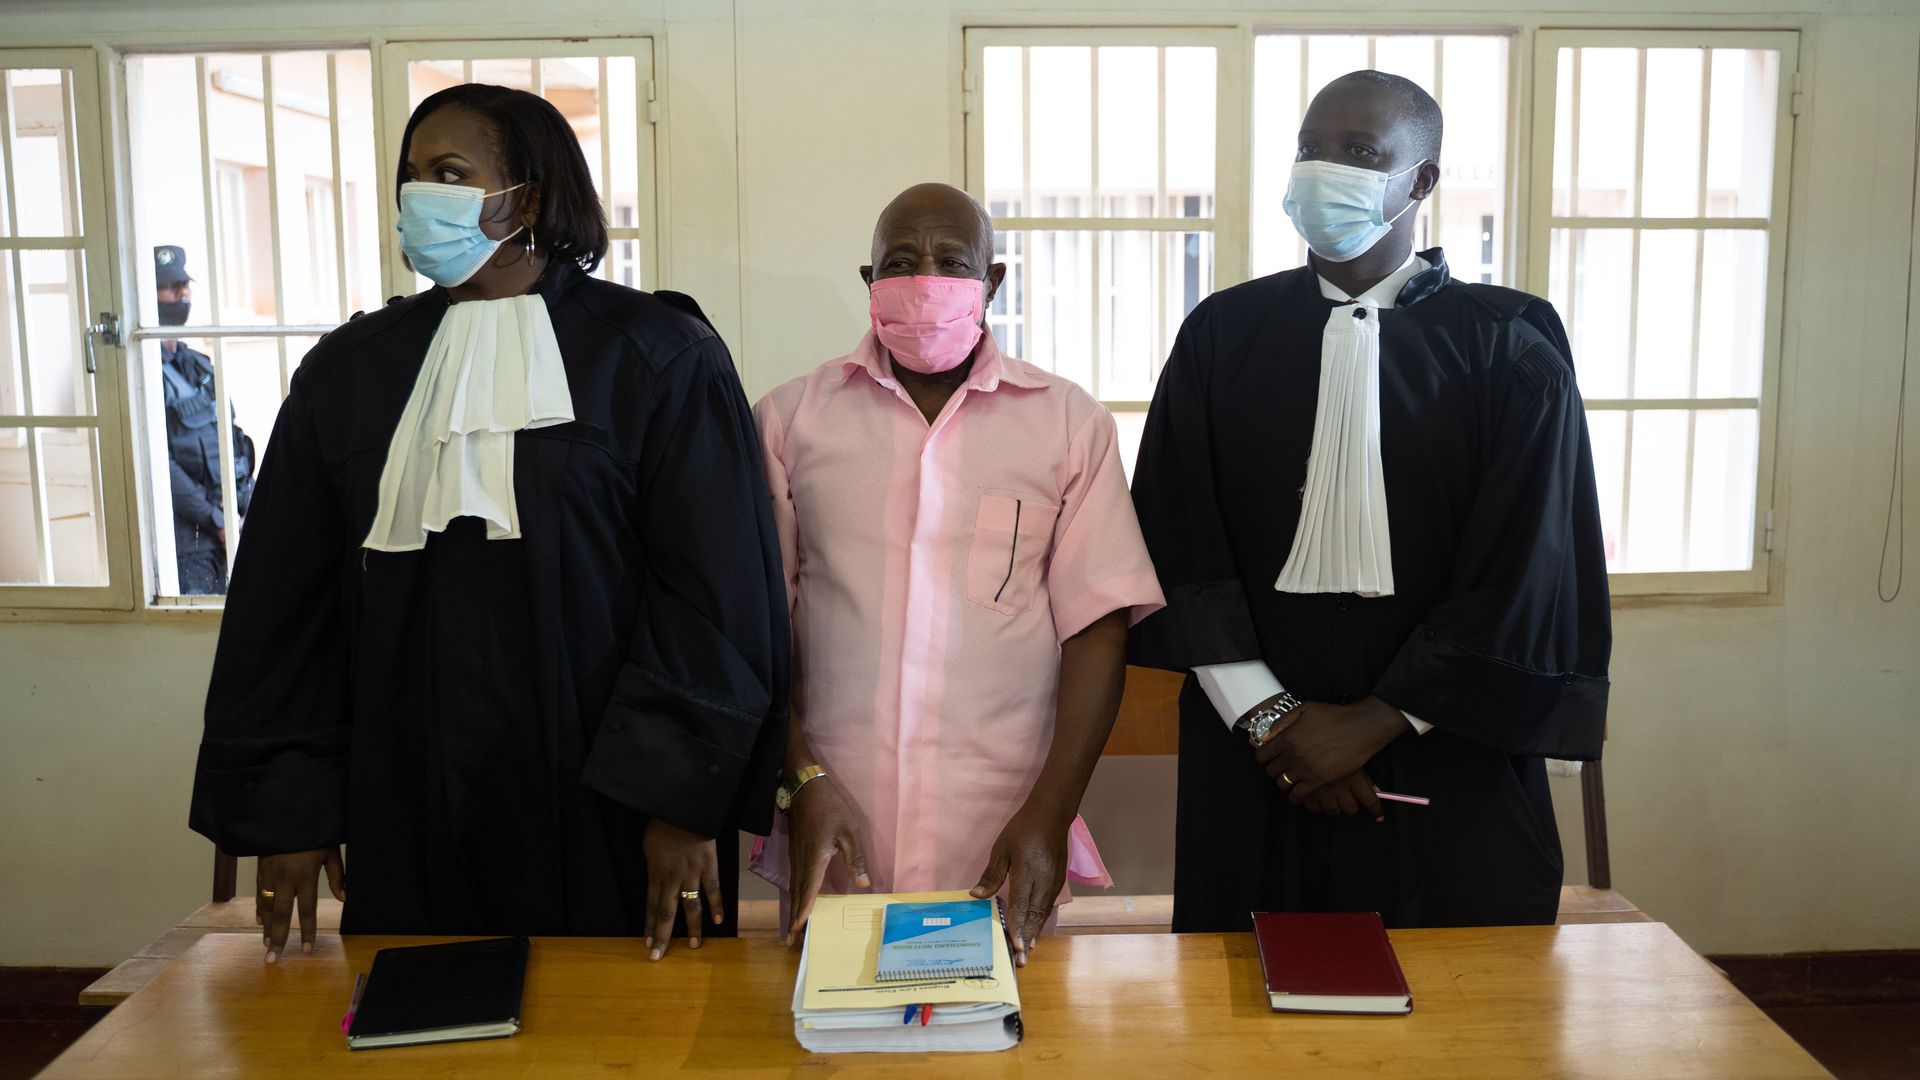 The hero of "Hotel Rwanda" is seen during his trial.